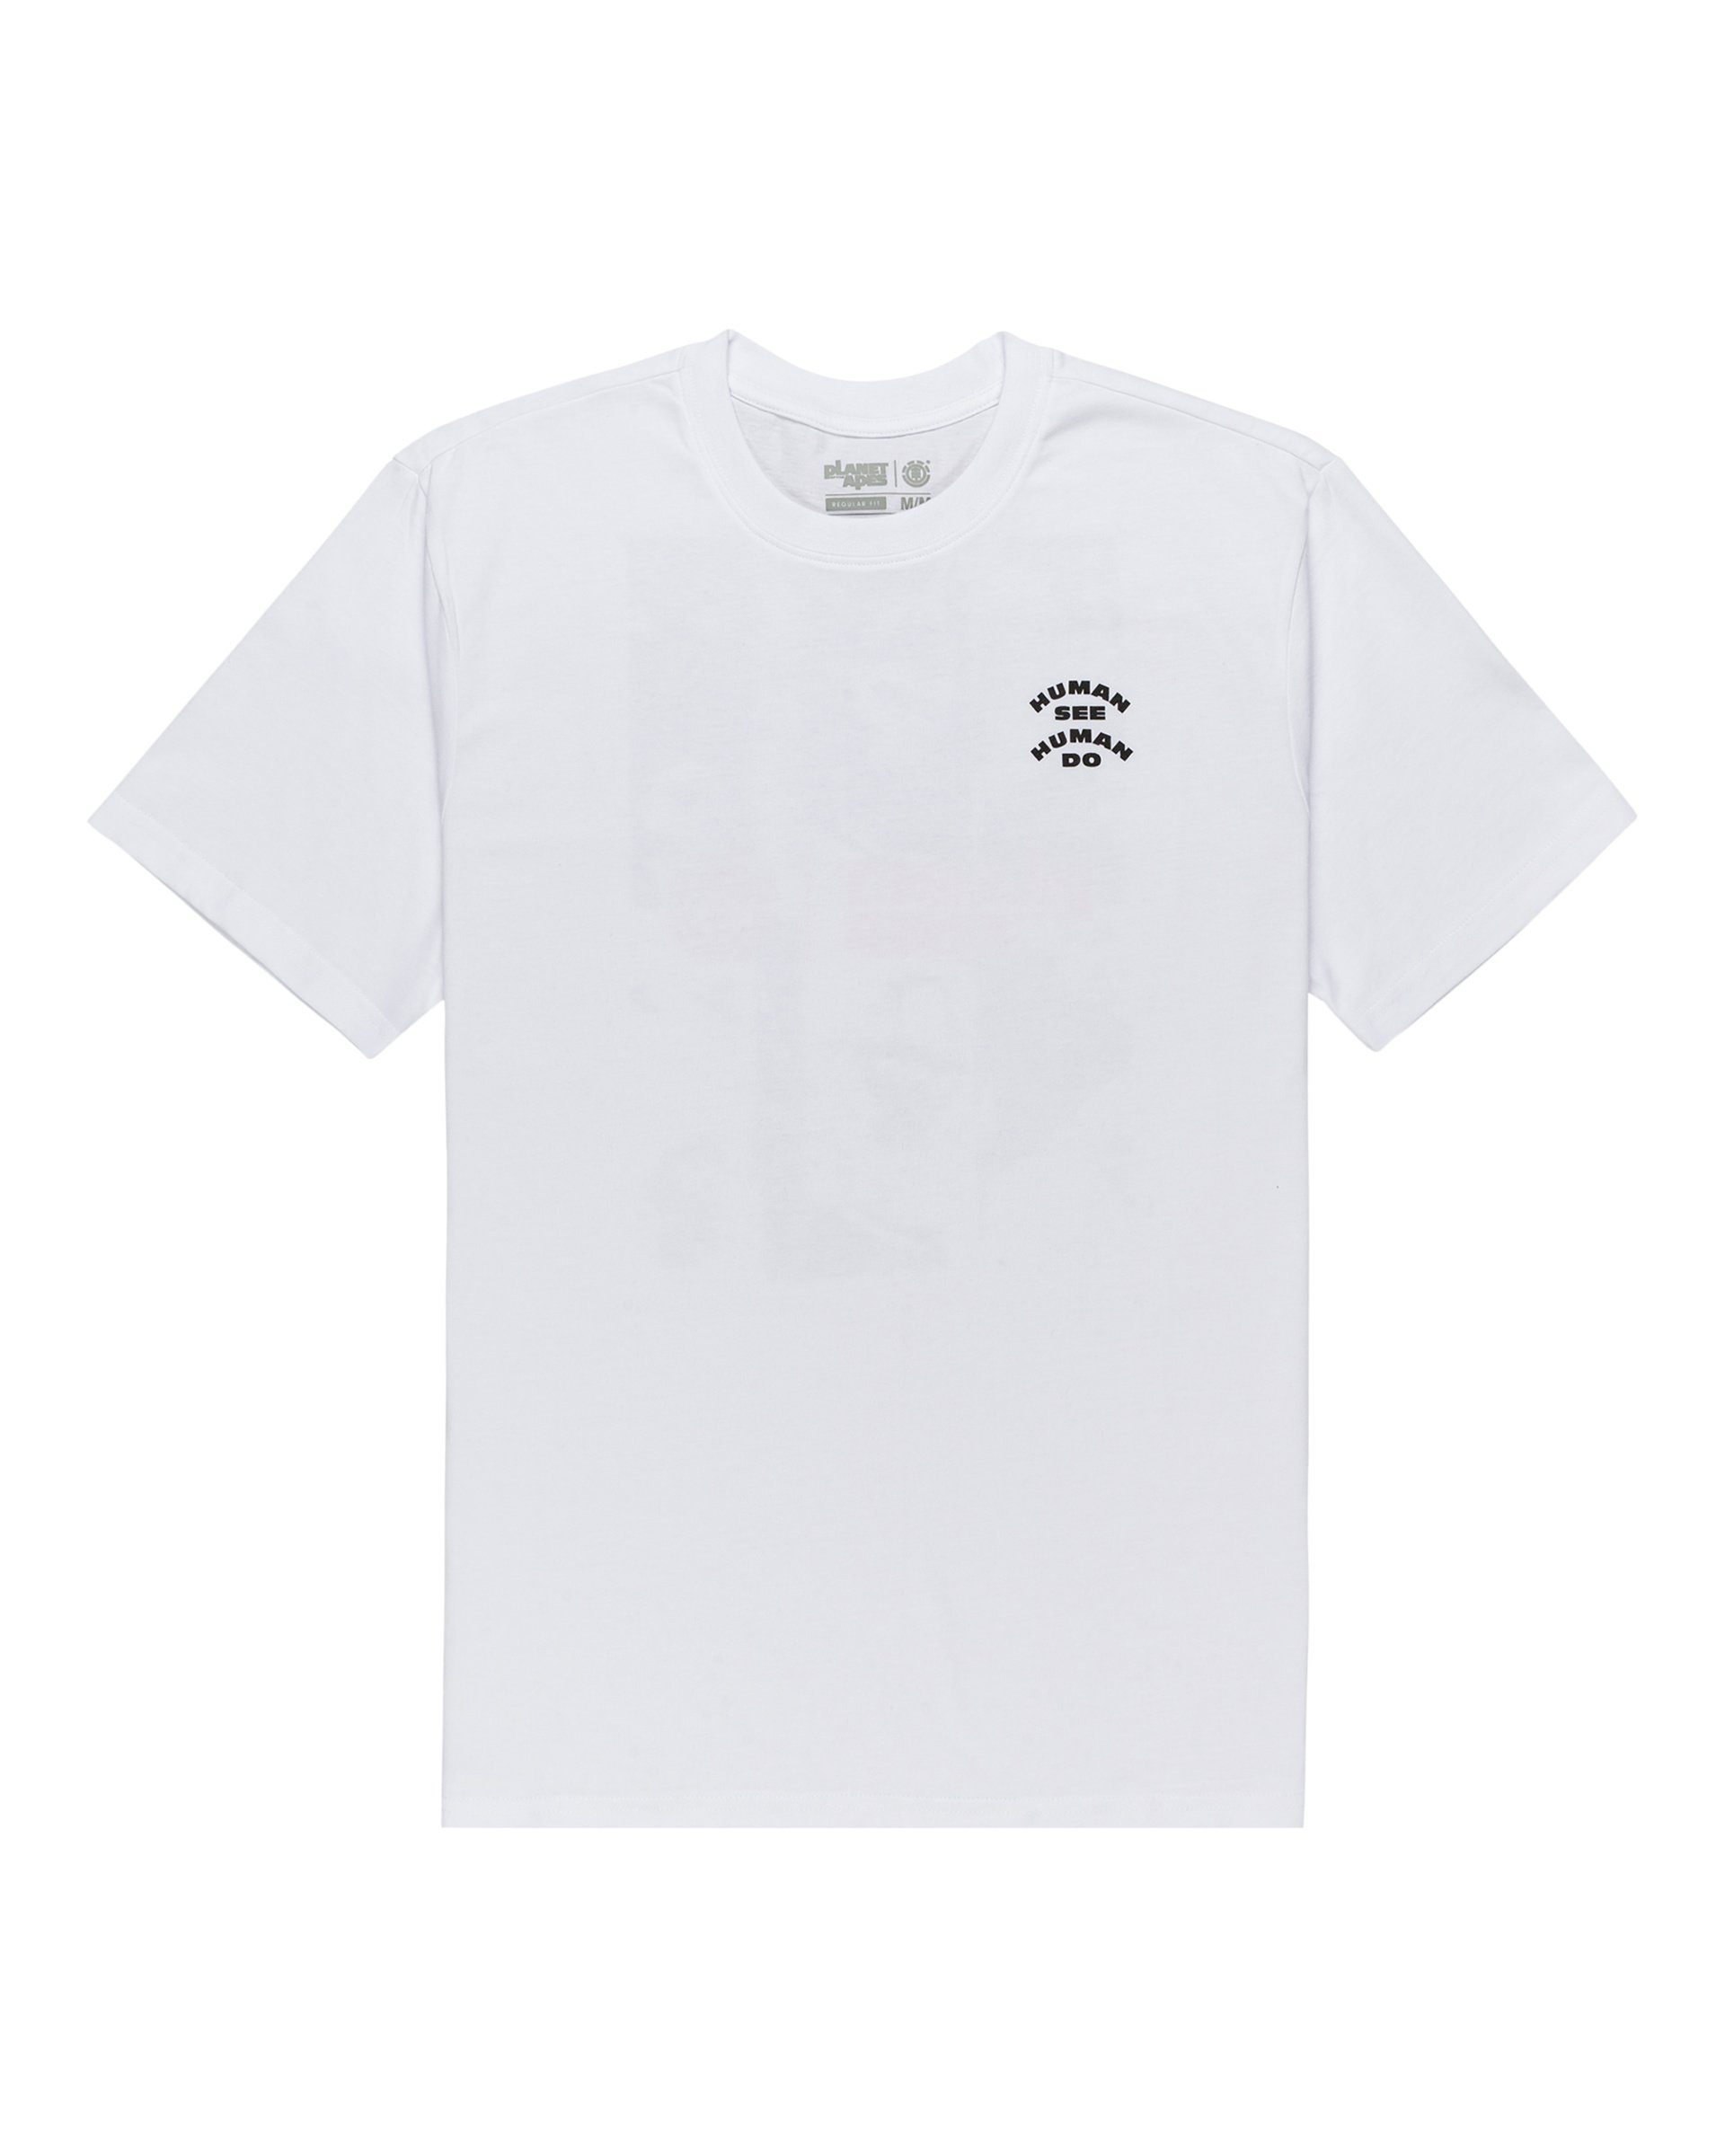 T-Shirt Herren Element Element Revival optic white Adult Pota T-Shirt